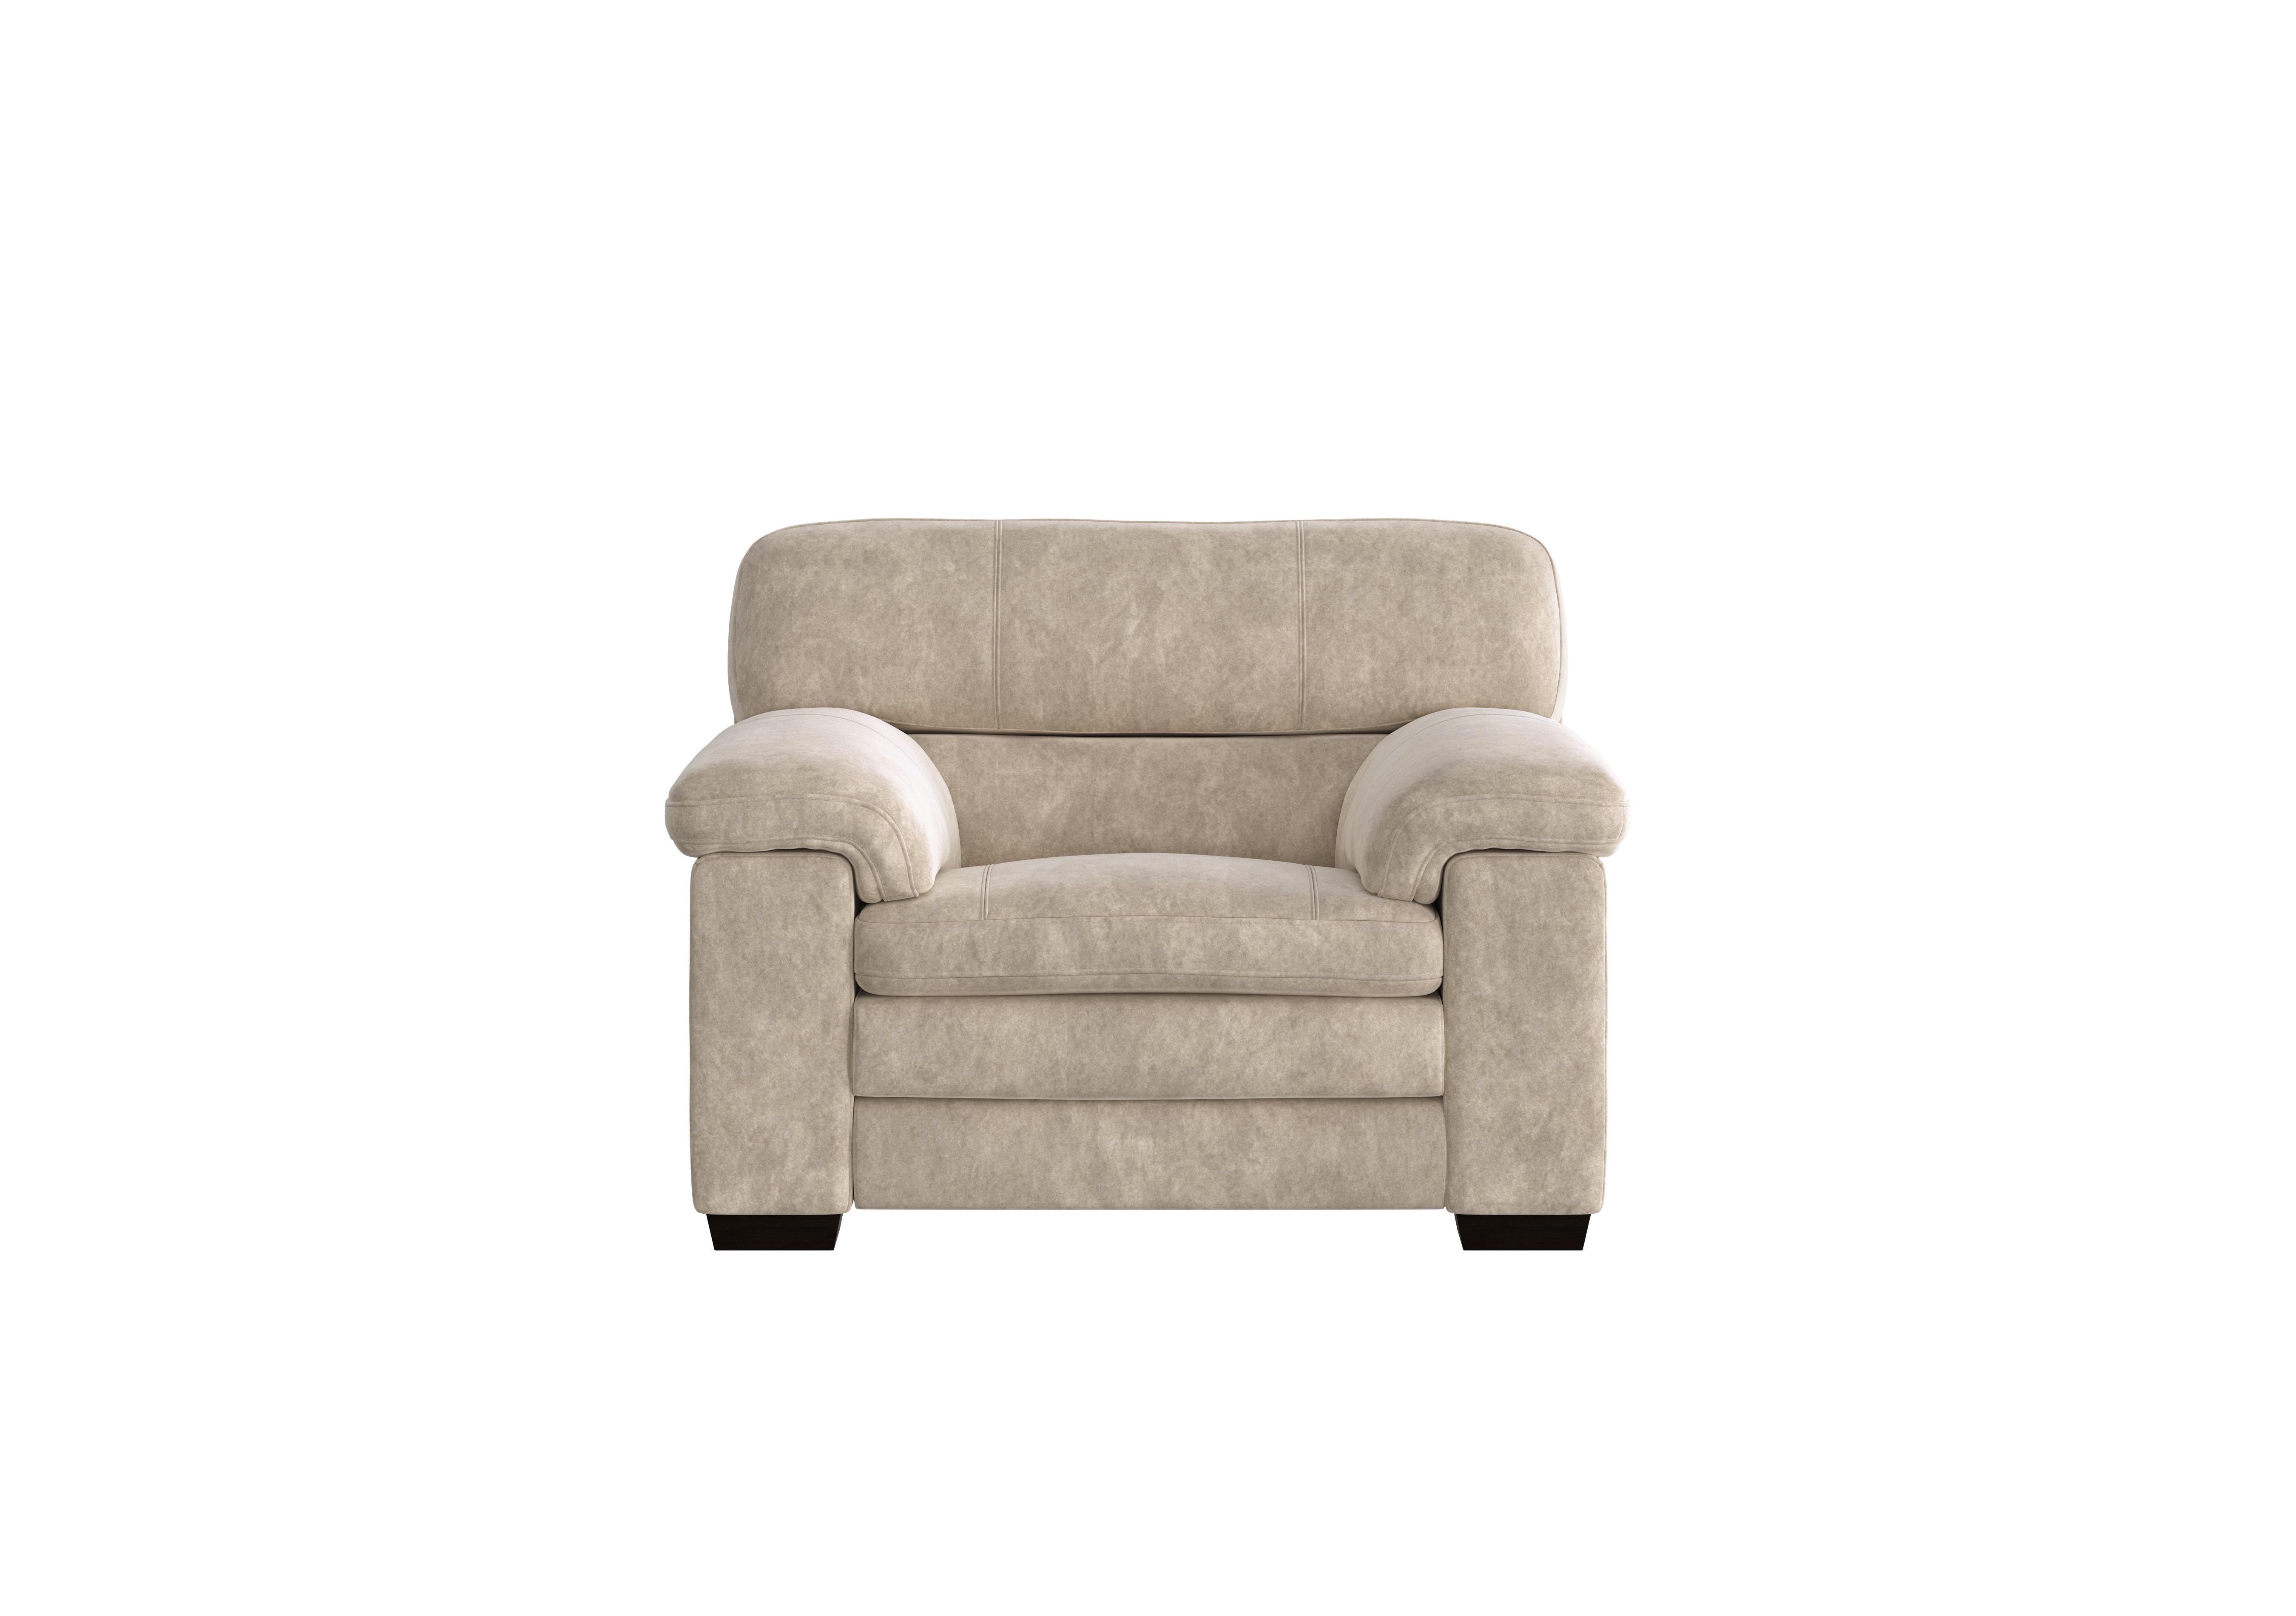 Cozee Fabric Armchair in Bfa-Bnn-R26 Fv2 Cream on Furniture Village